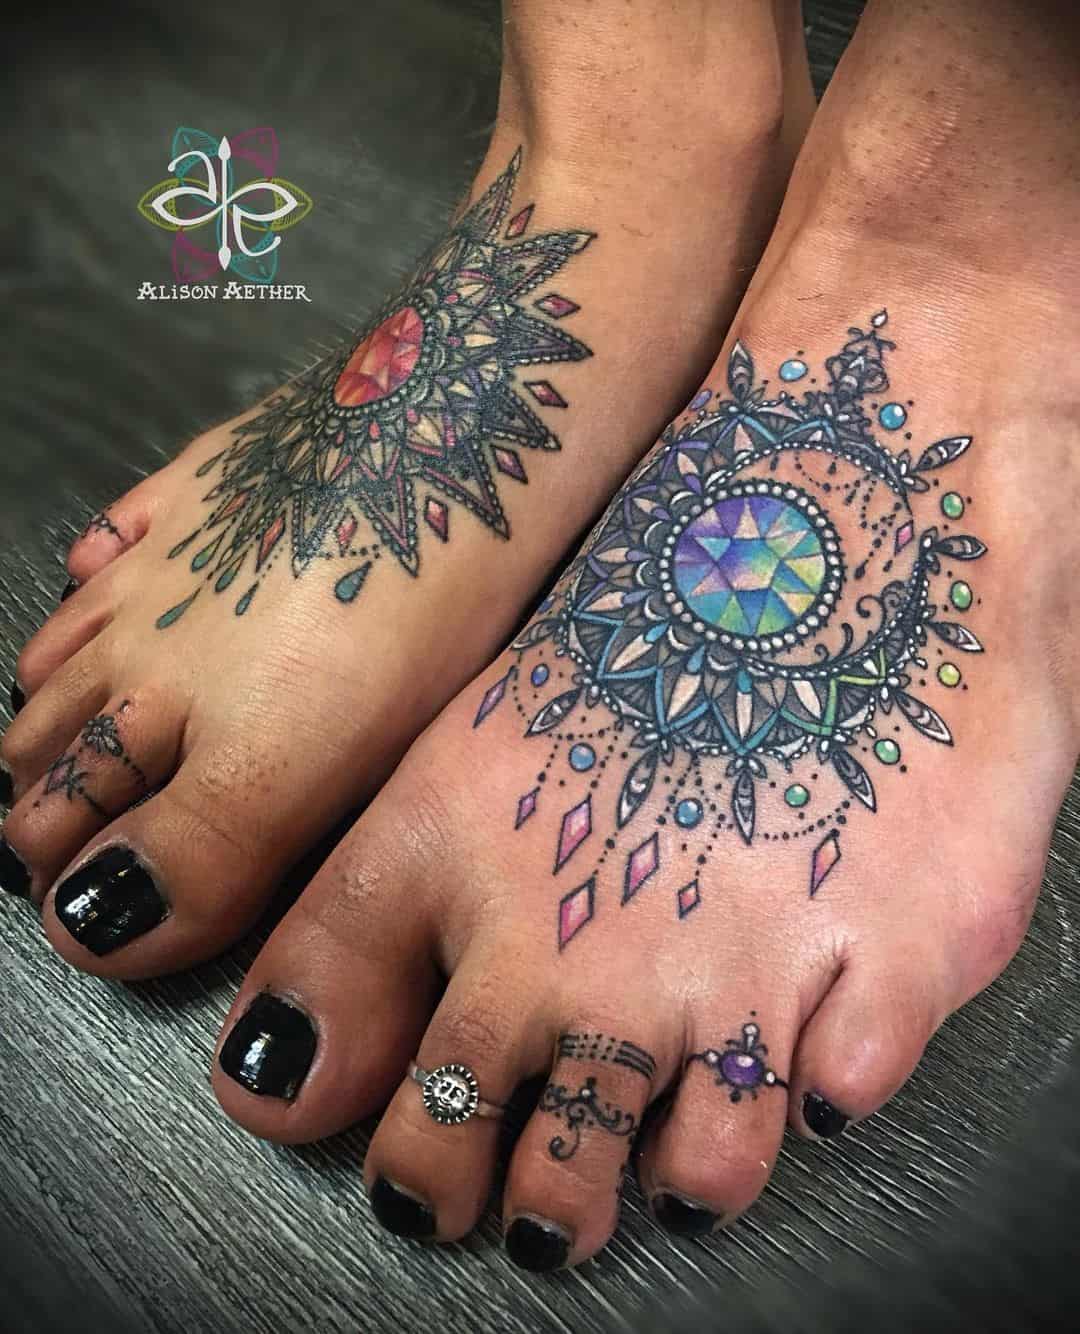 25. Mandala and magical toe tattoos.